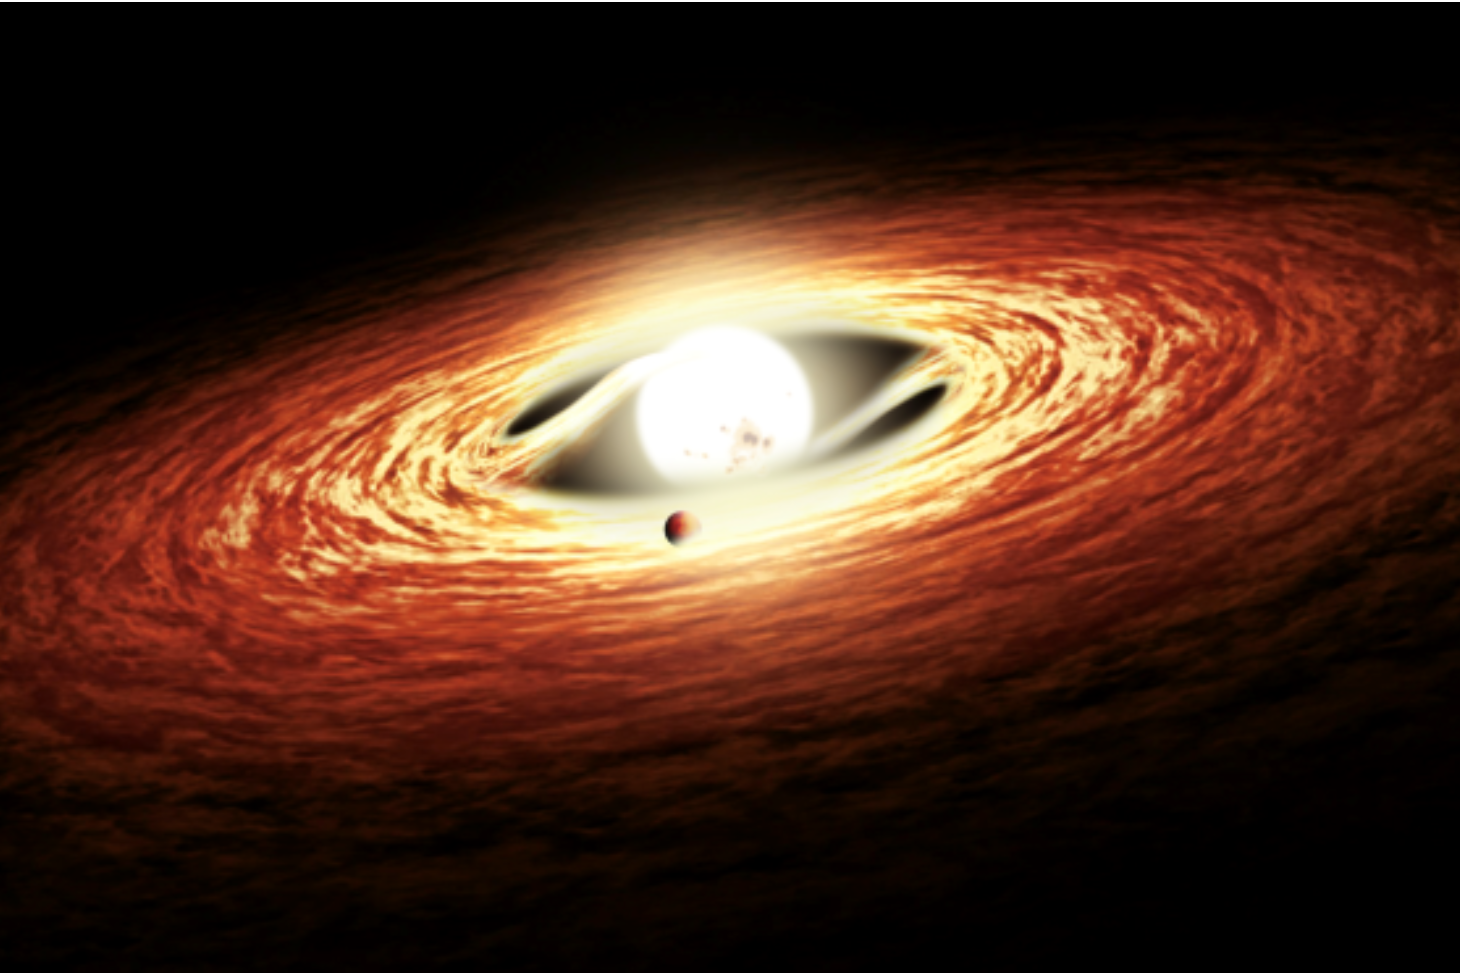 © NASA/JPL-Caltech/ adapted by Kritish Kariman